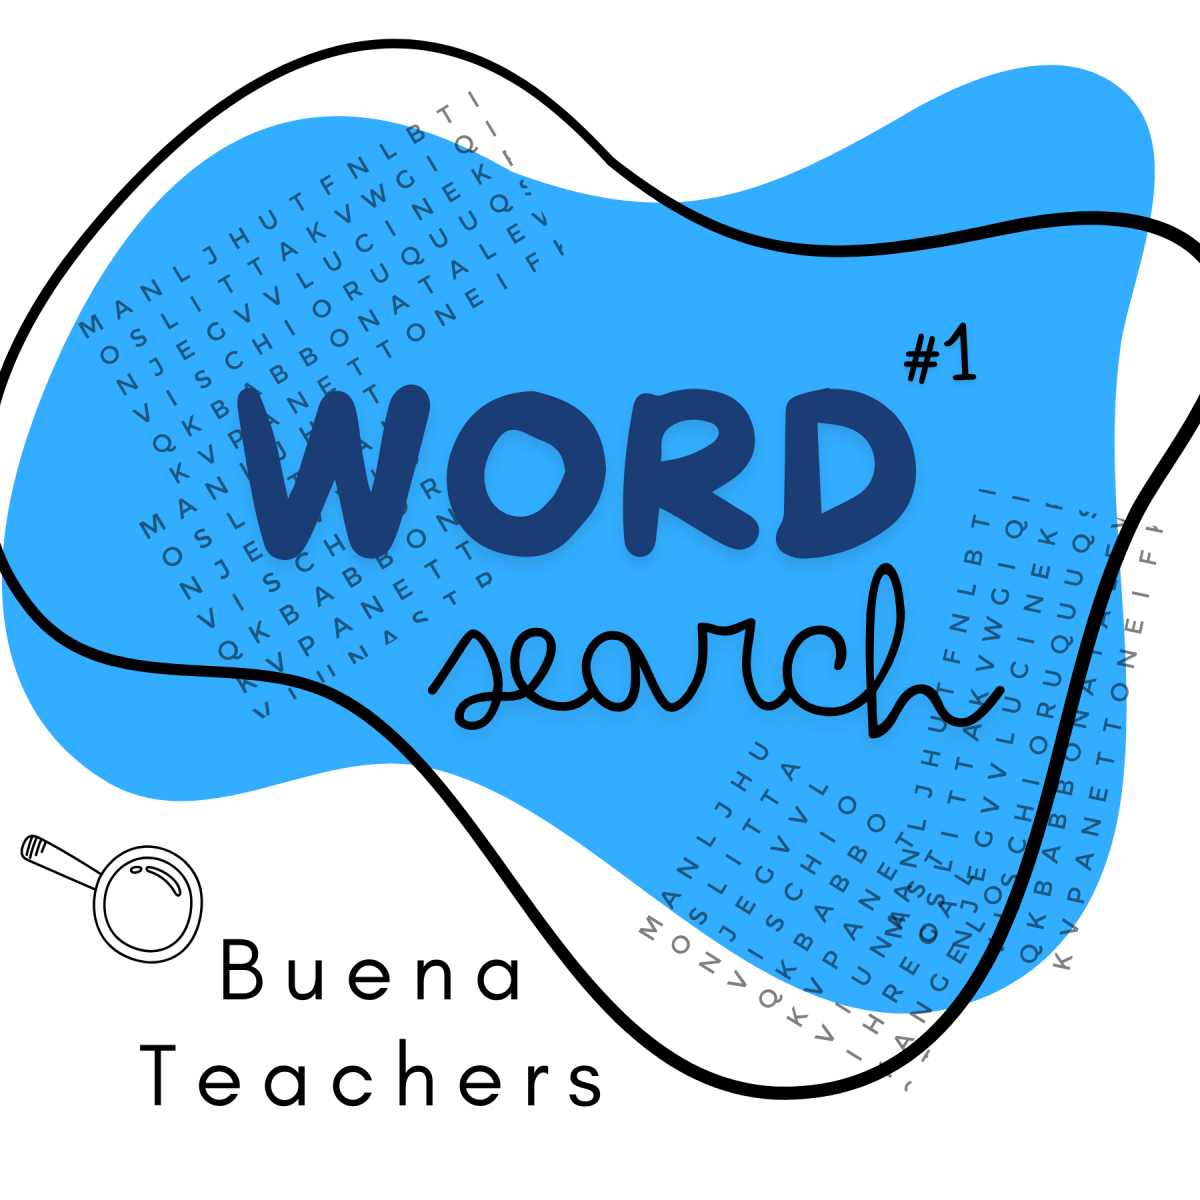 Word search - Teacher edition